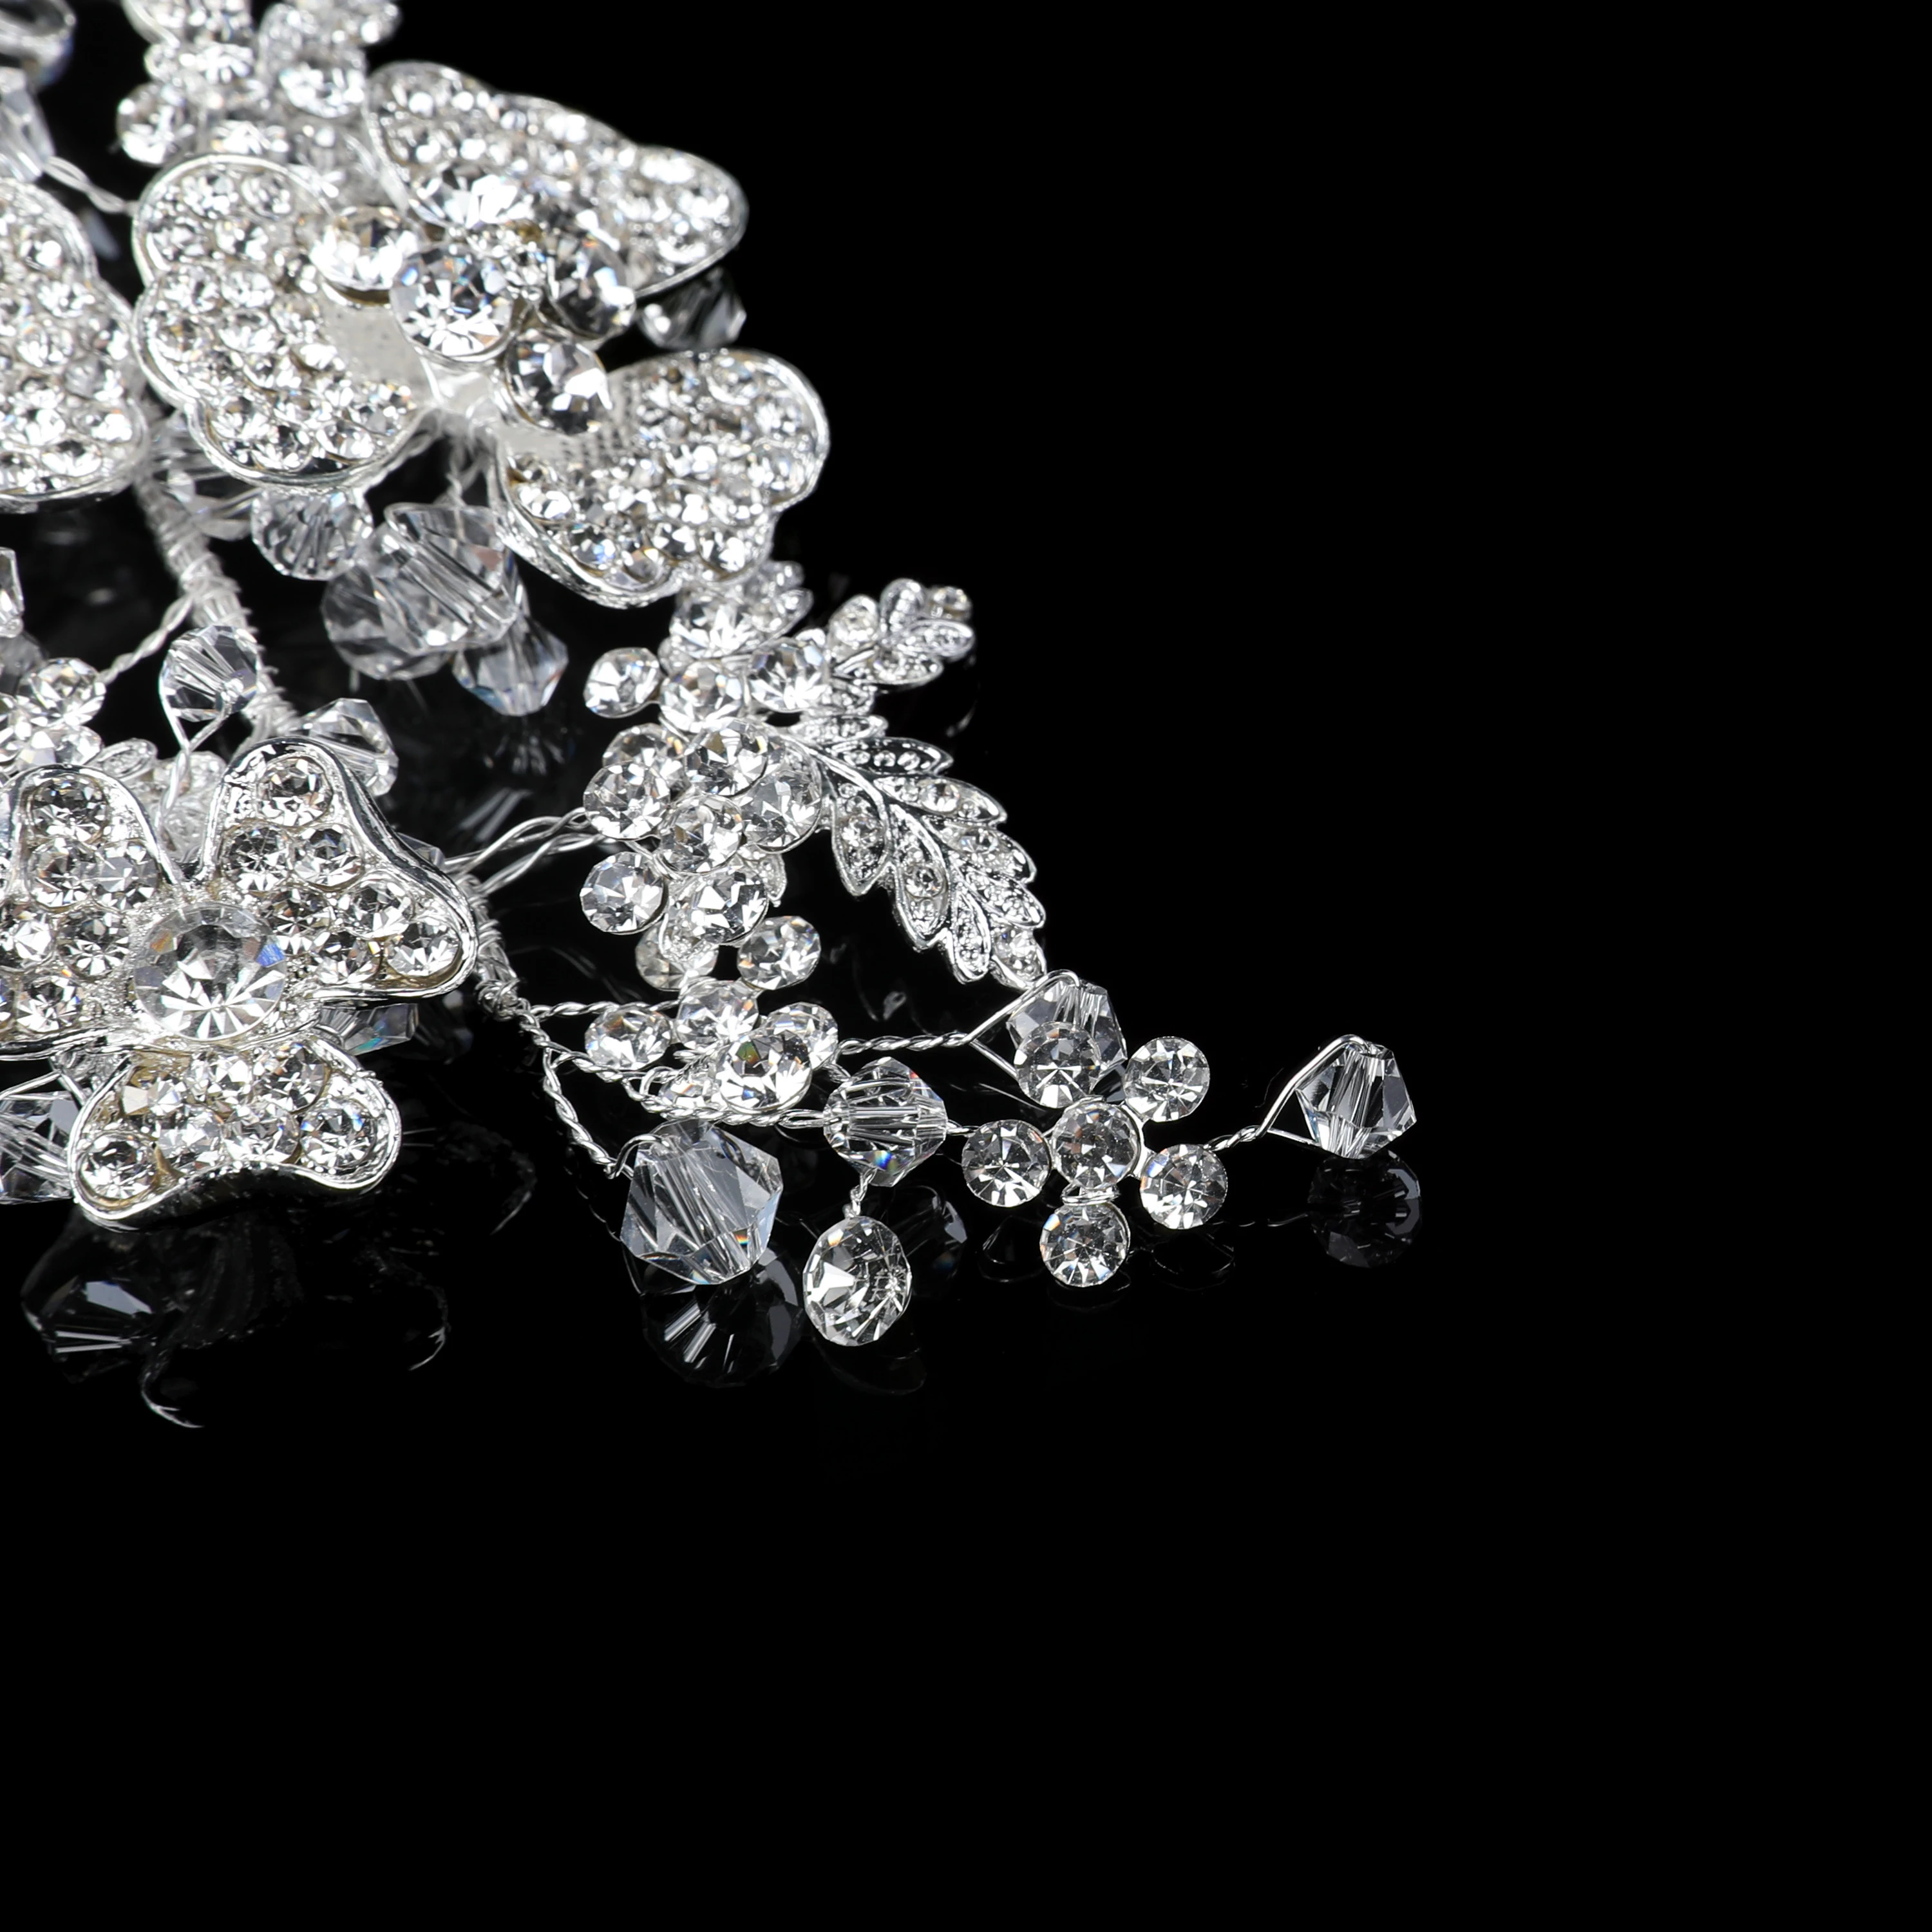 SG0134 New luxury silver bridal tiara flower rhinestone hair accessories wedding hair clip on sale